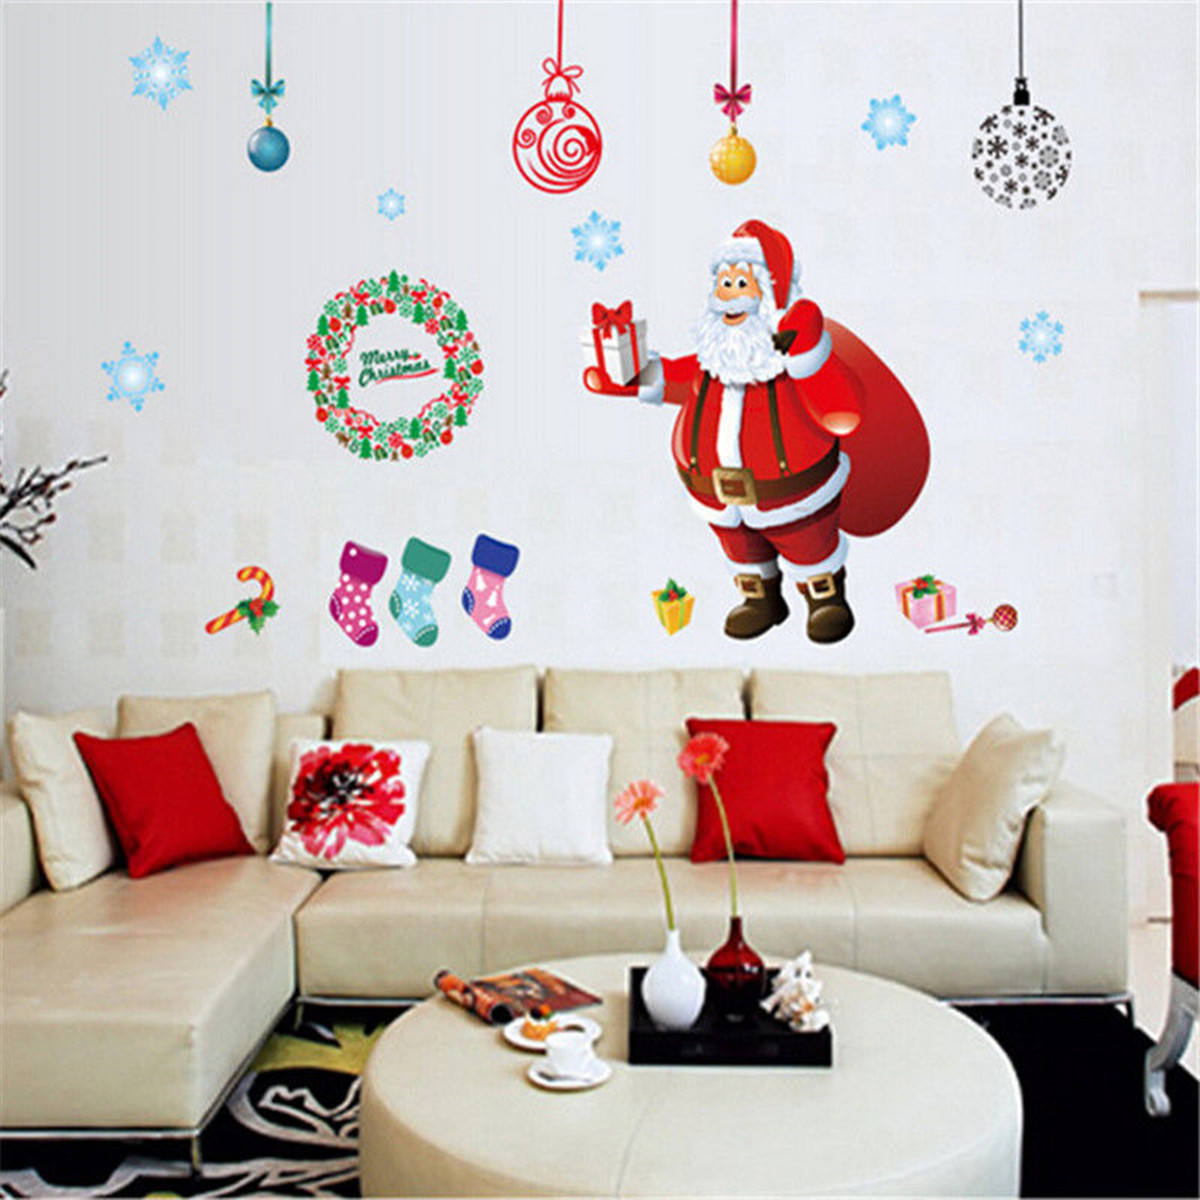 Christmas-Tree-Wall-Sticker-Santa-Claus-Gift-Wall-Art-Window-Home-Decoration-1086741-5